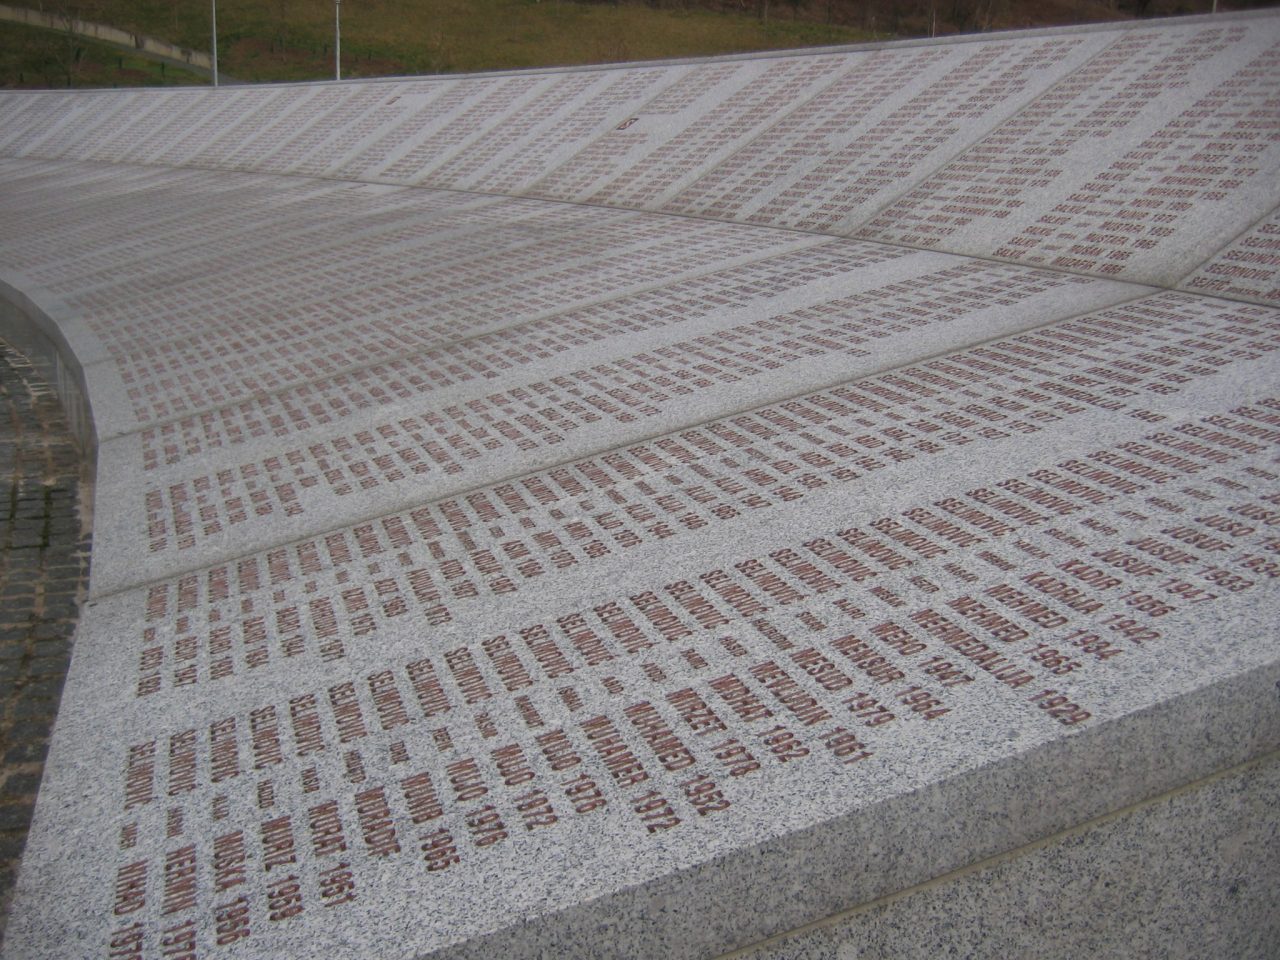 Srebrenica_massacre_memorial_wall_of_names_2009_2-1280x960.jpg